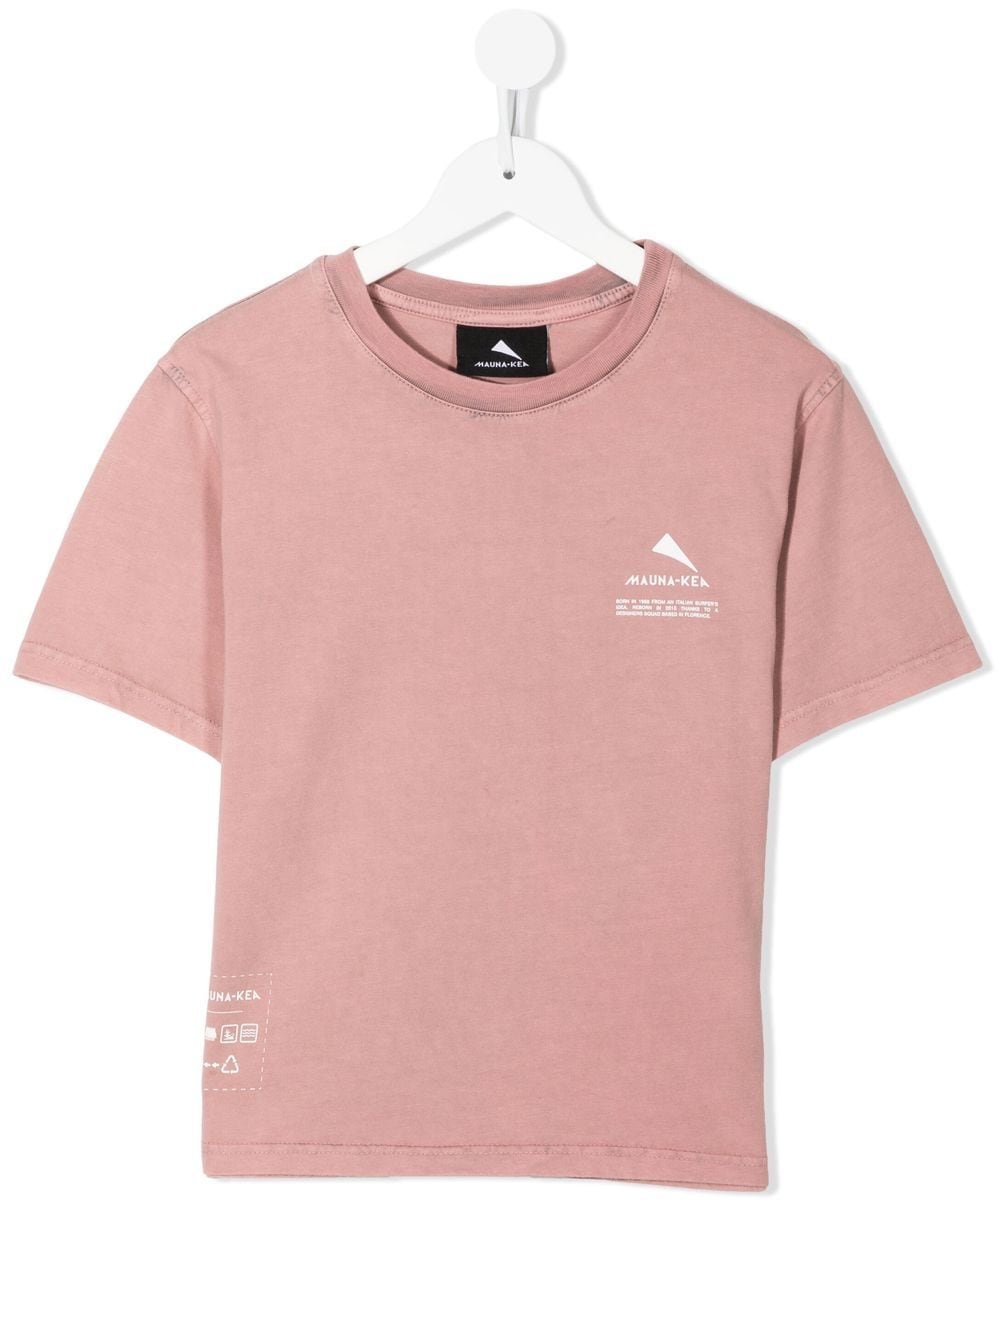 mauna kea t-shirt à logo imprimé - rose